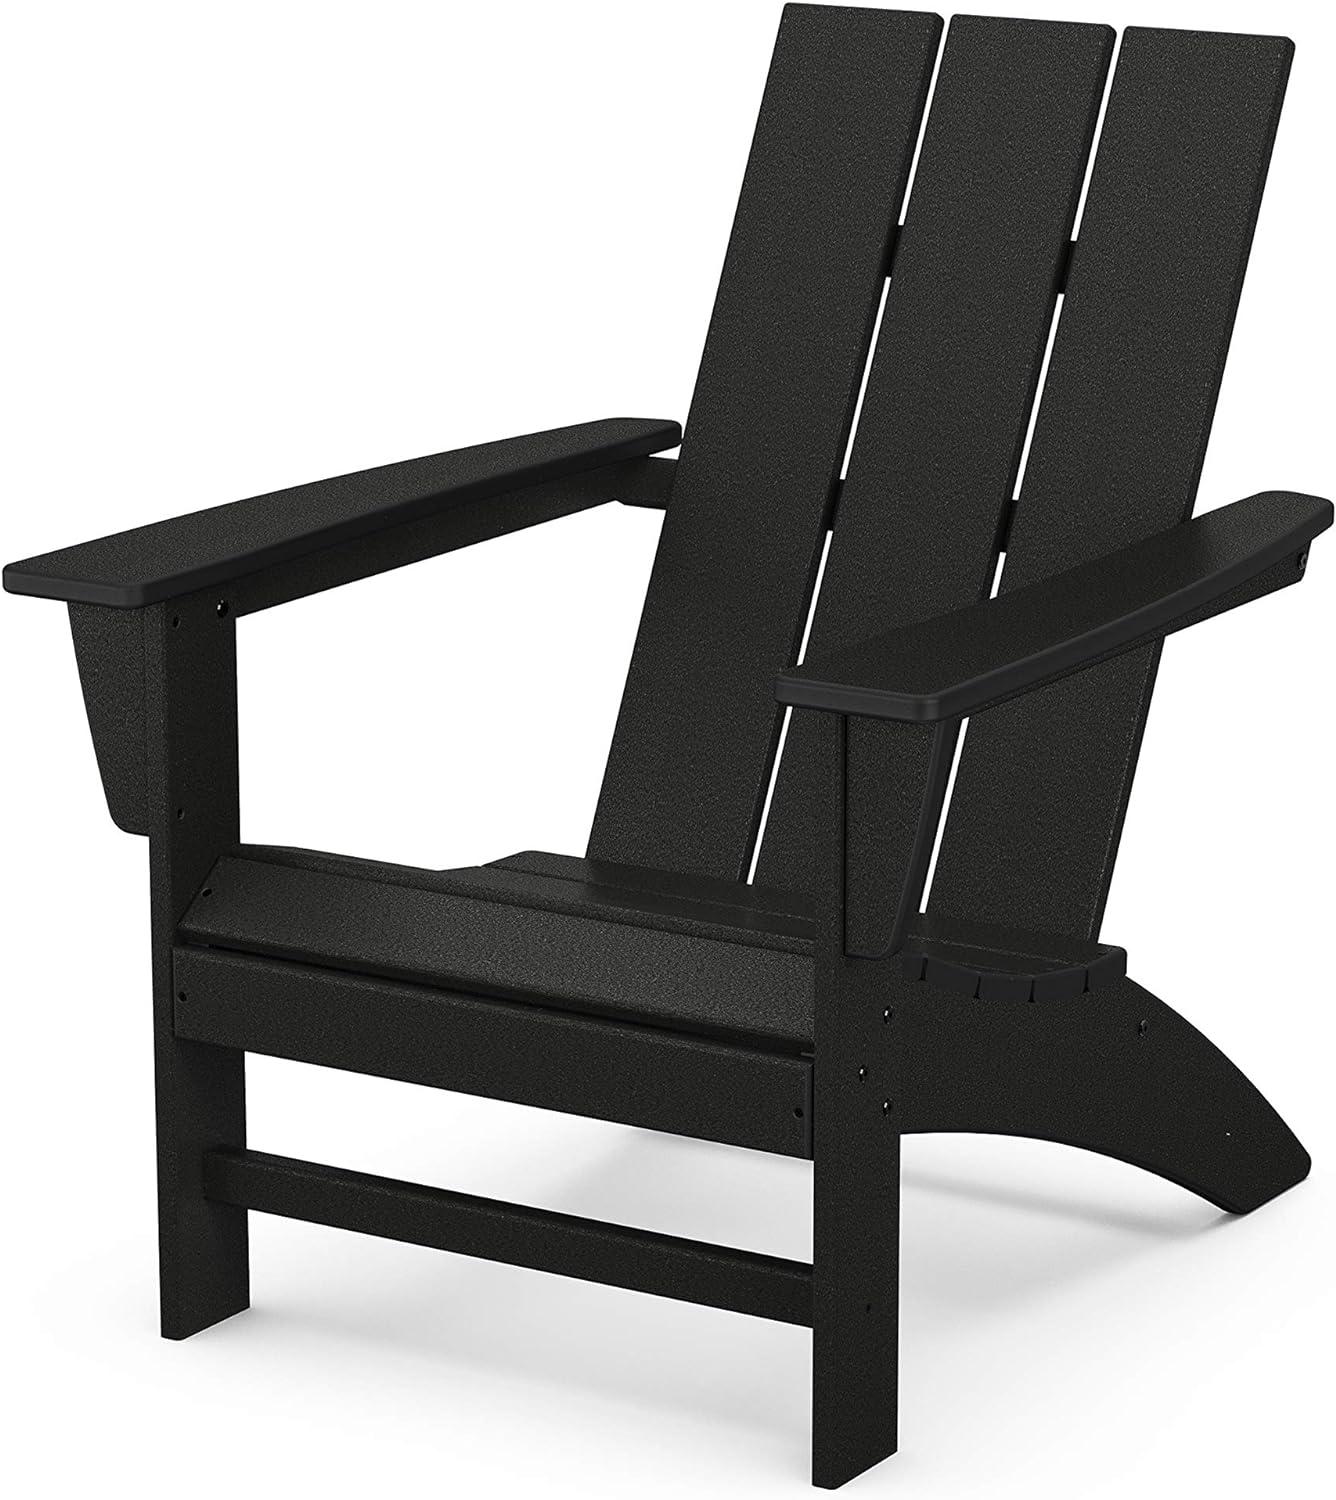 Syracuse Modern Black POLYWOOD Adirondack Outdoor Chair